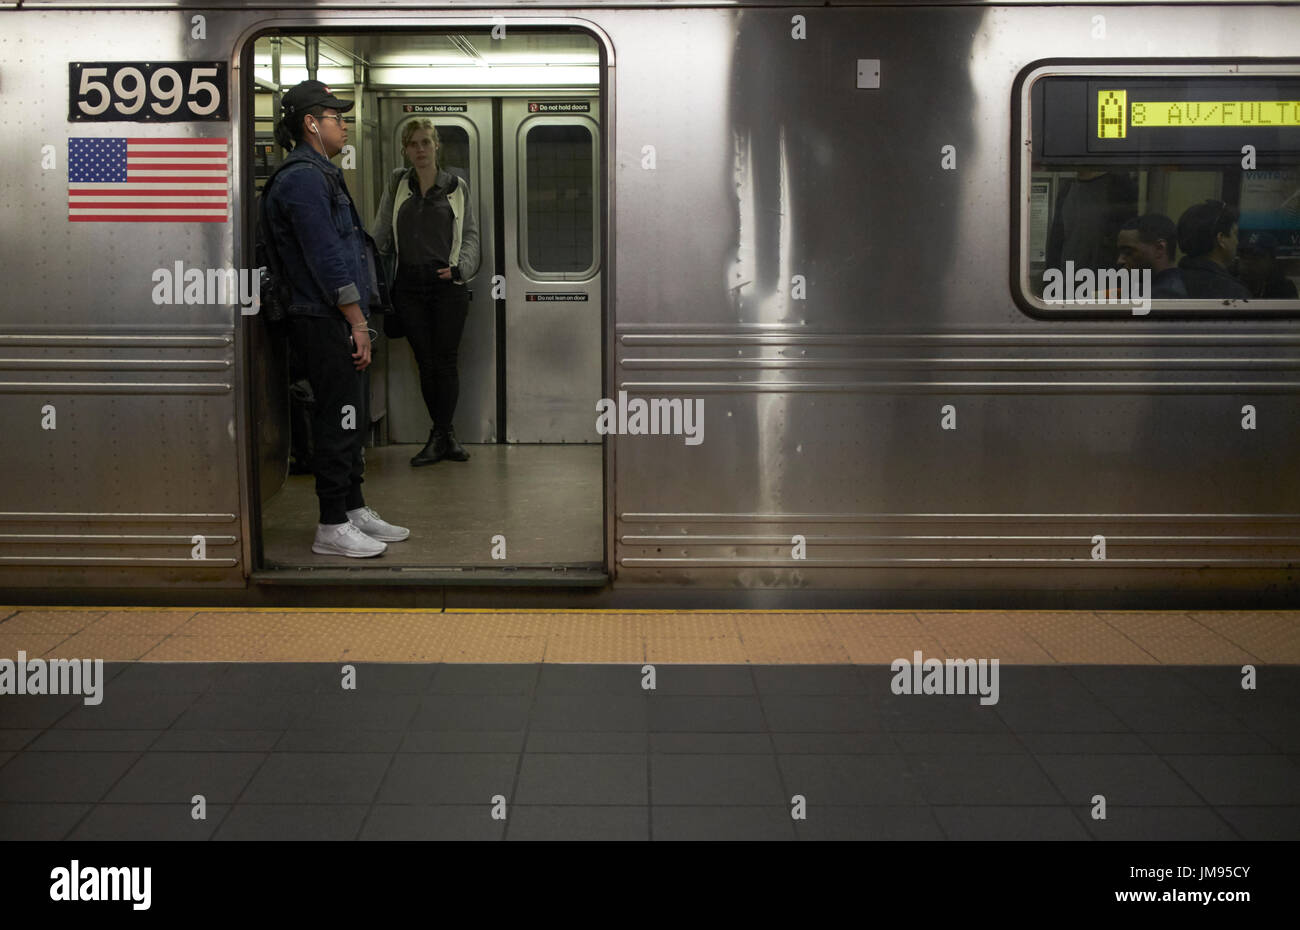 doors open on train carriage new york subway New York City USA Stock Photo